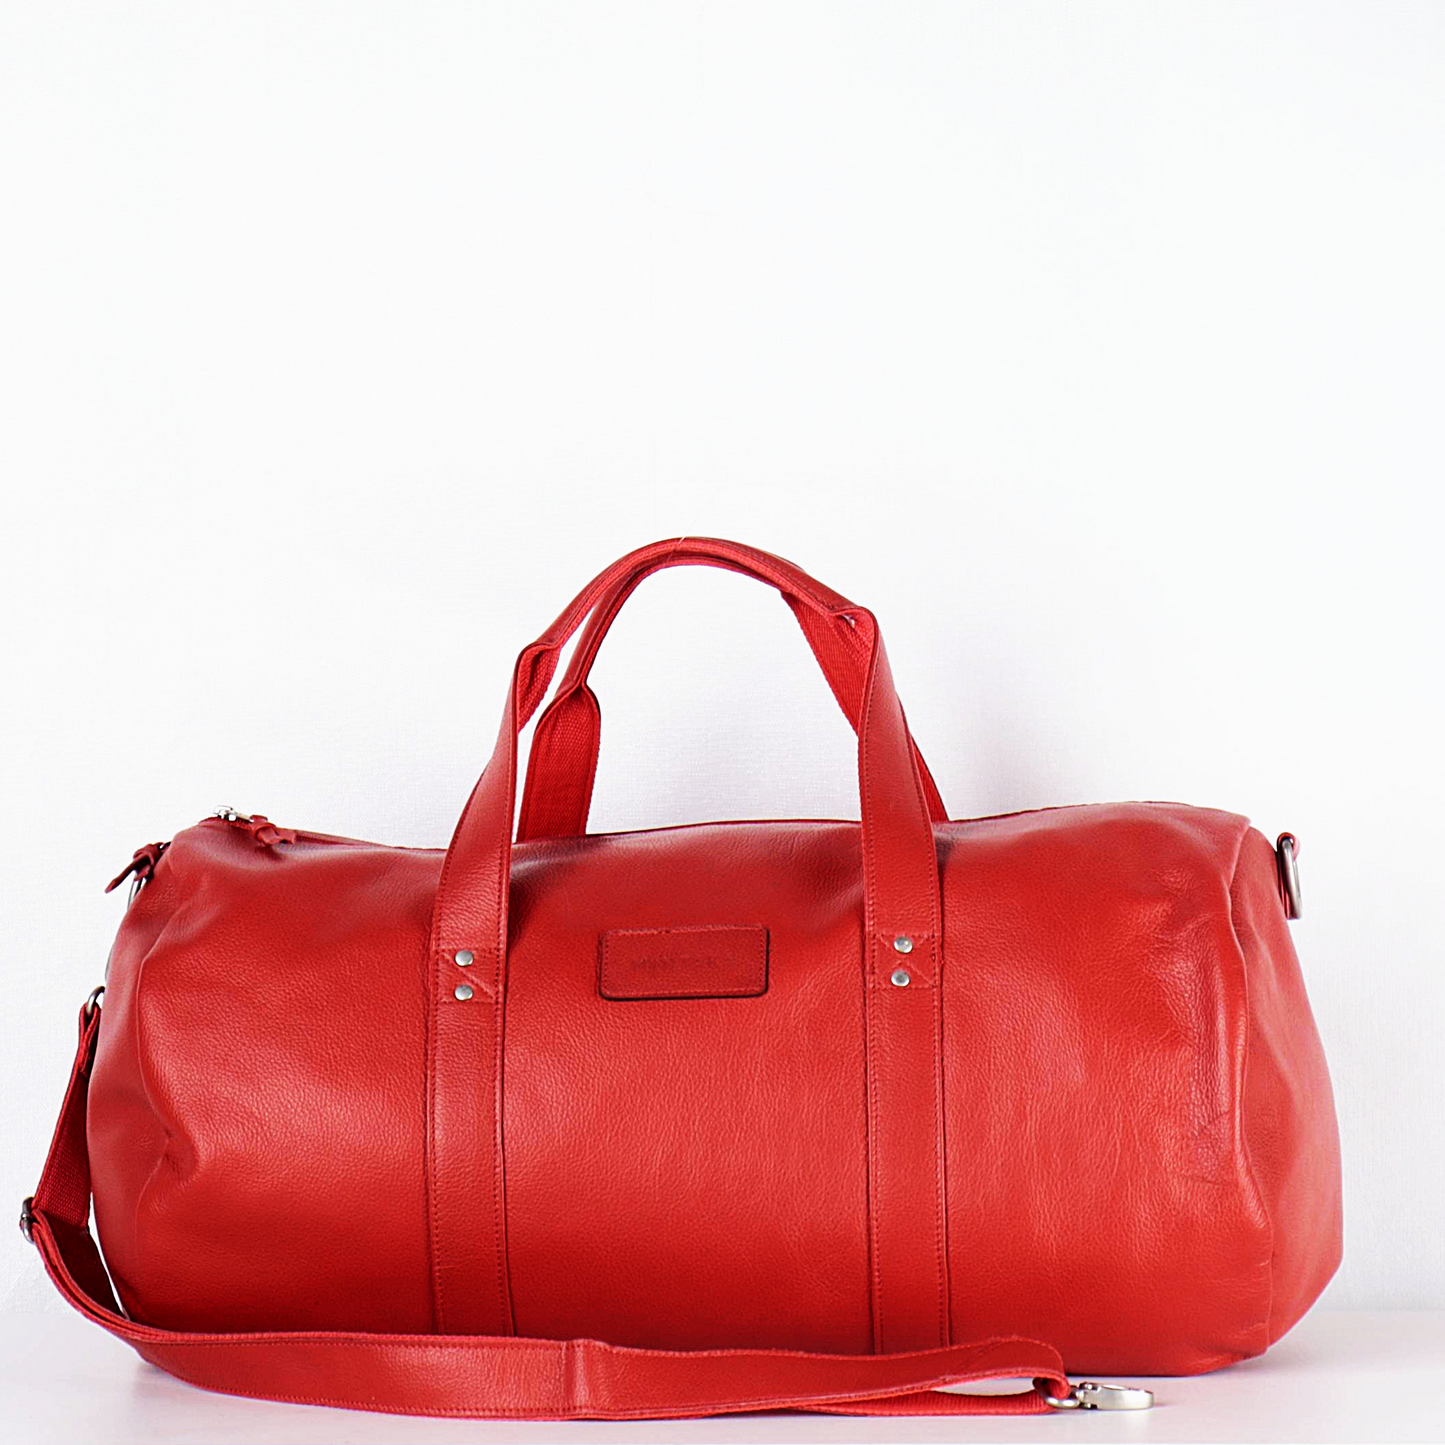 Fabi Leather Duffel Bag